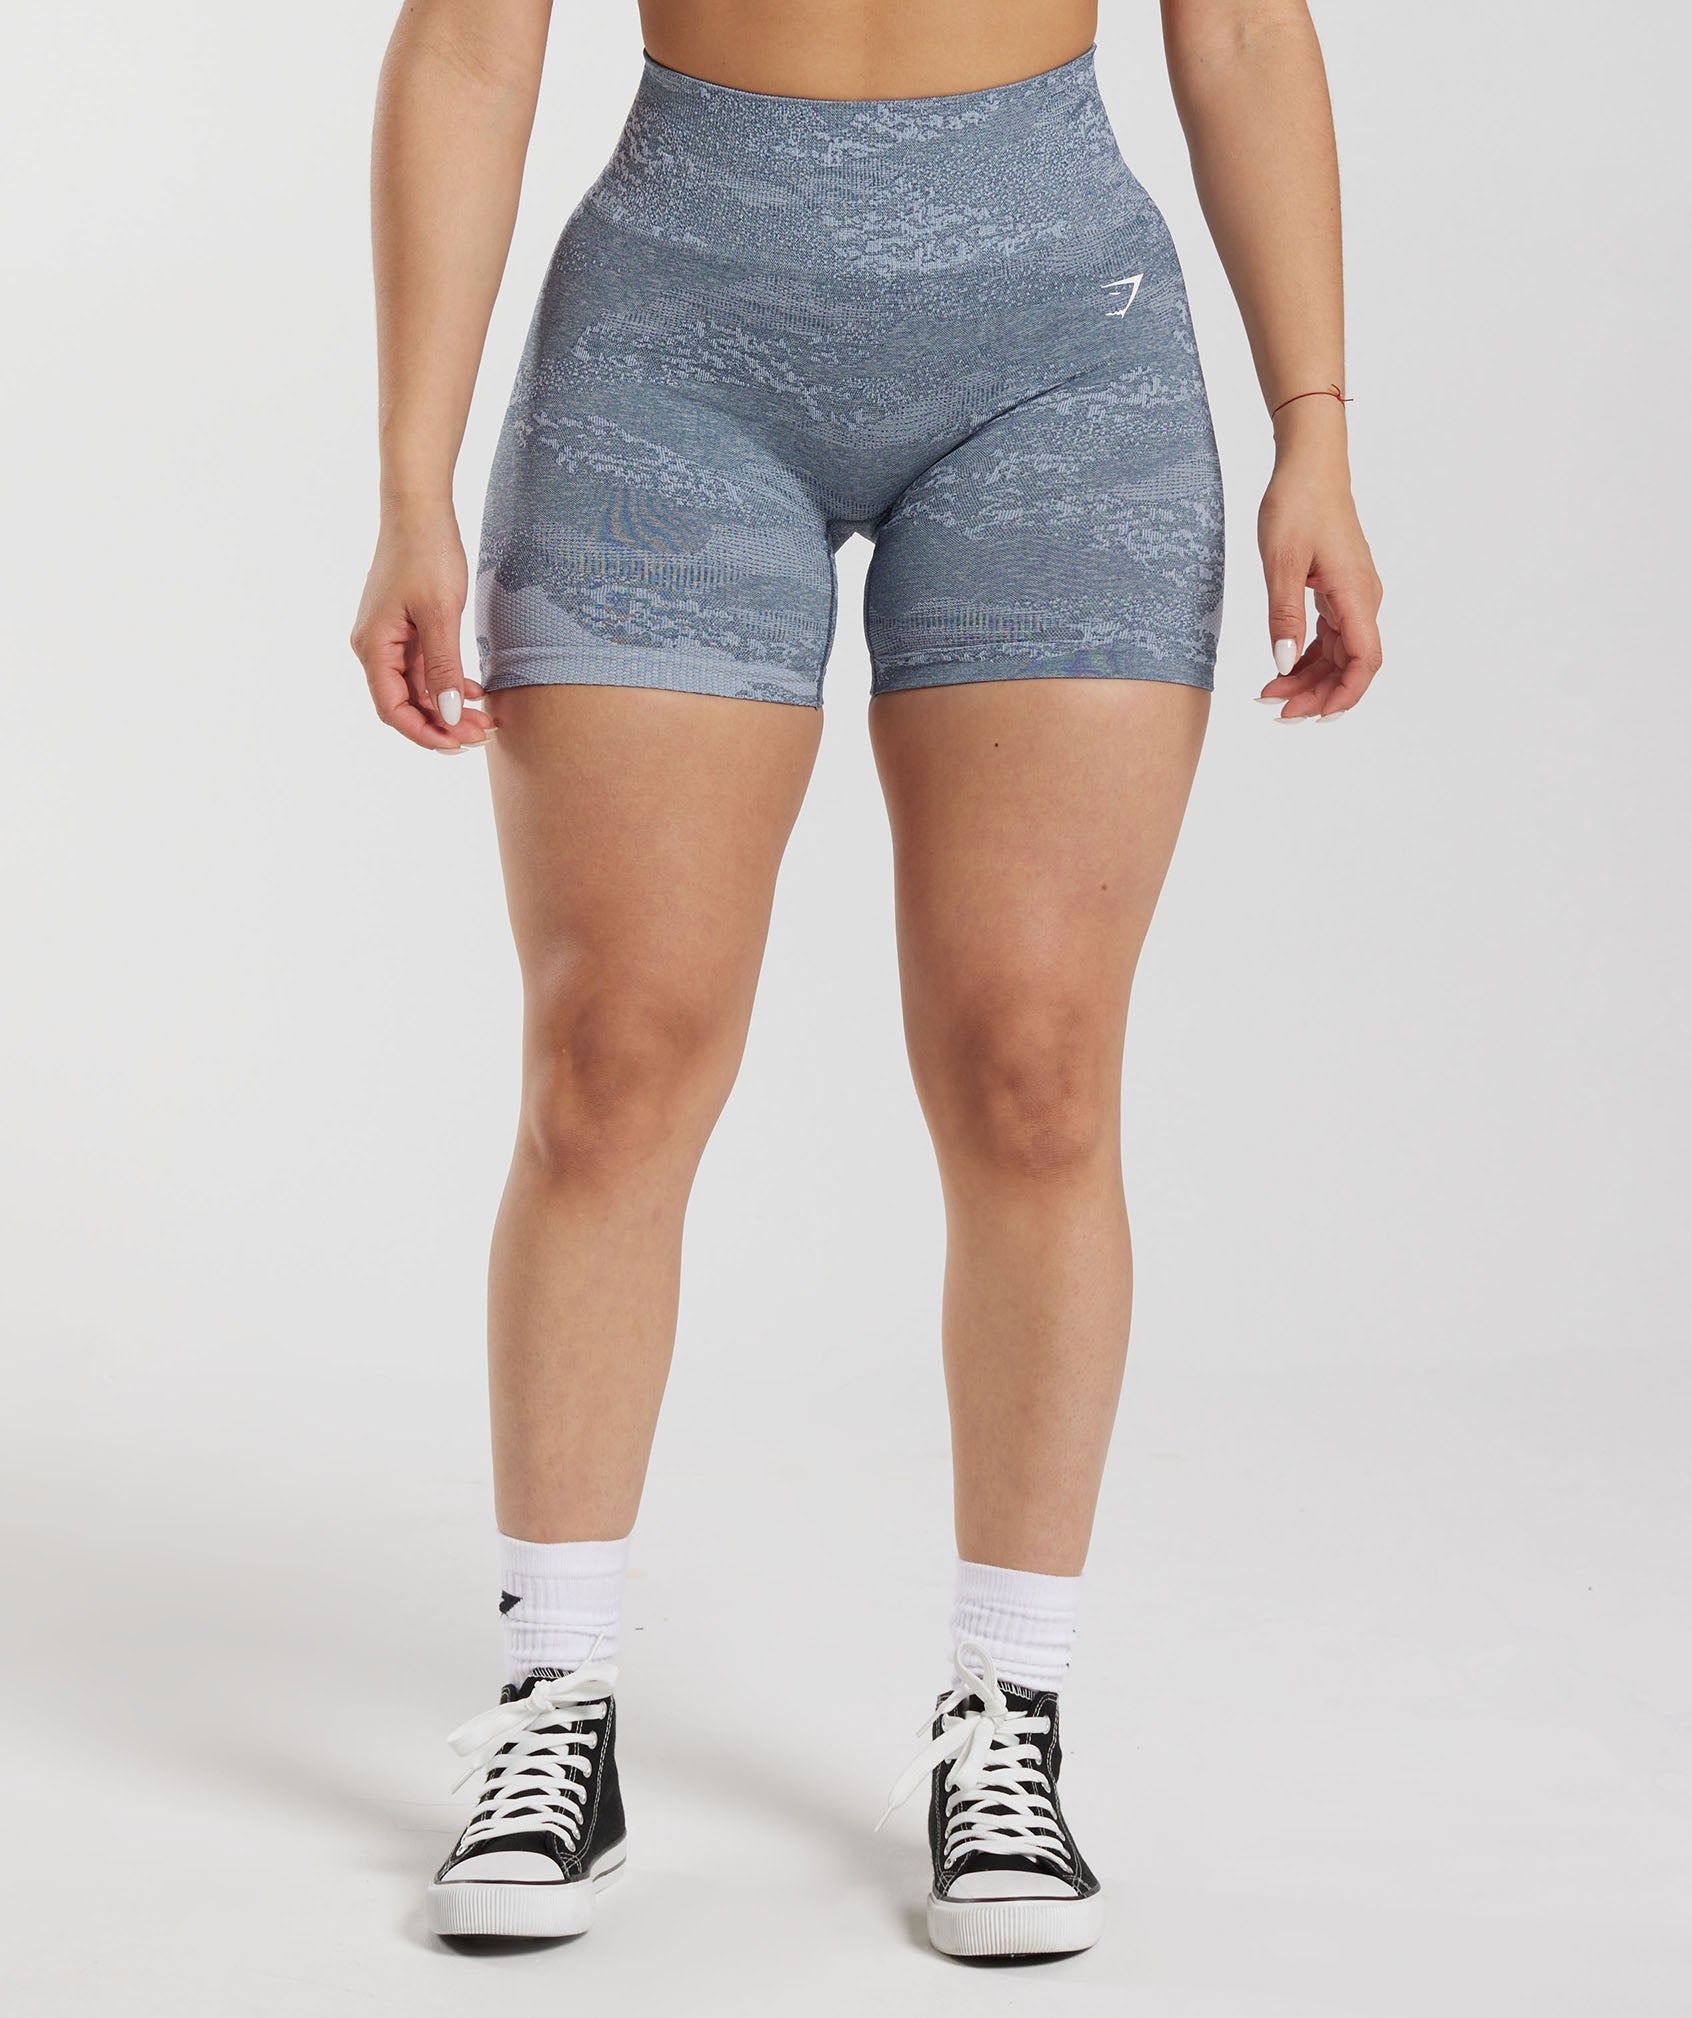 Grey Women Shorts Cheap Sale